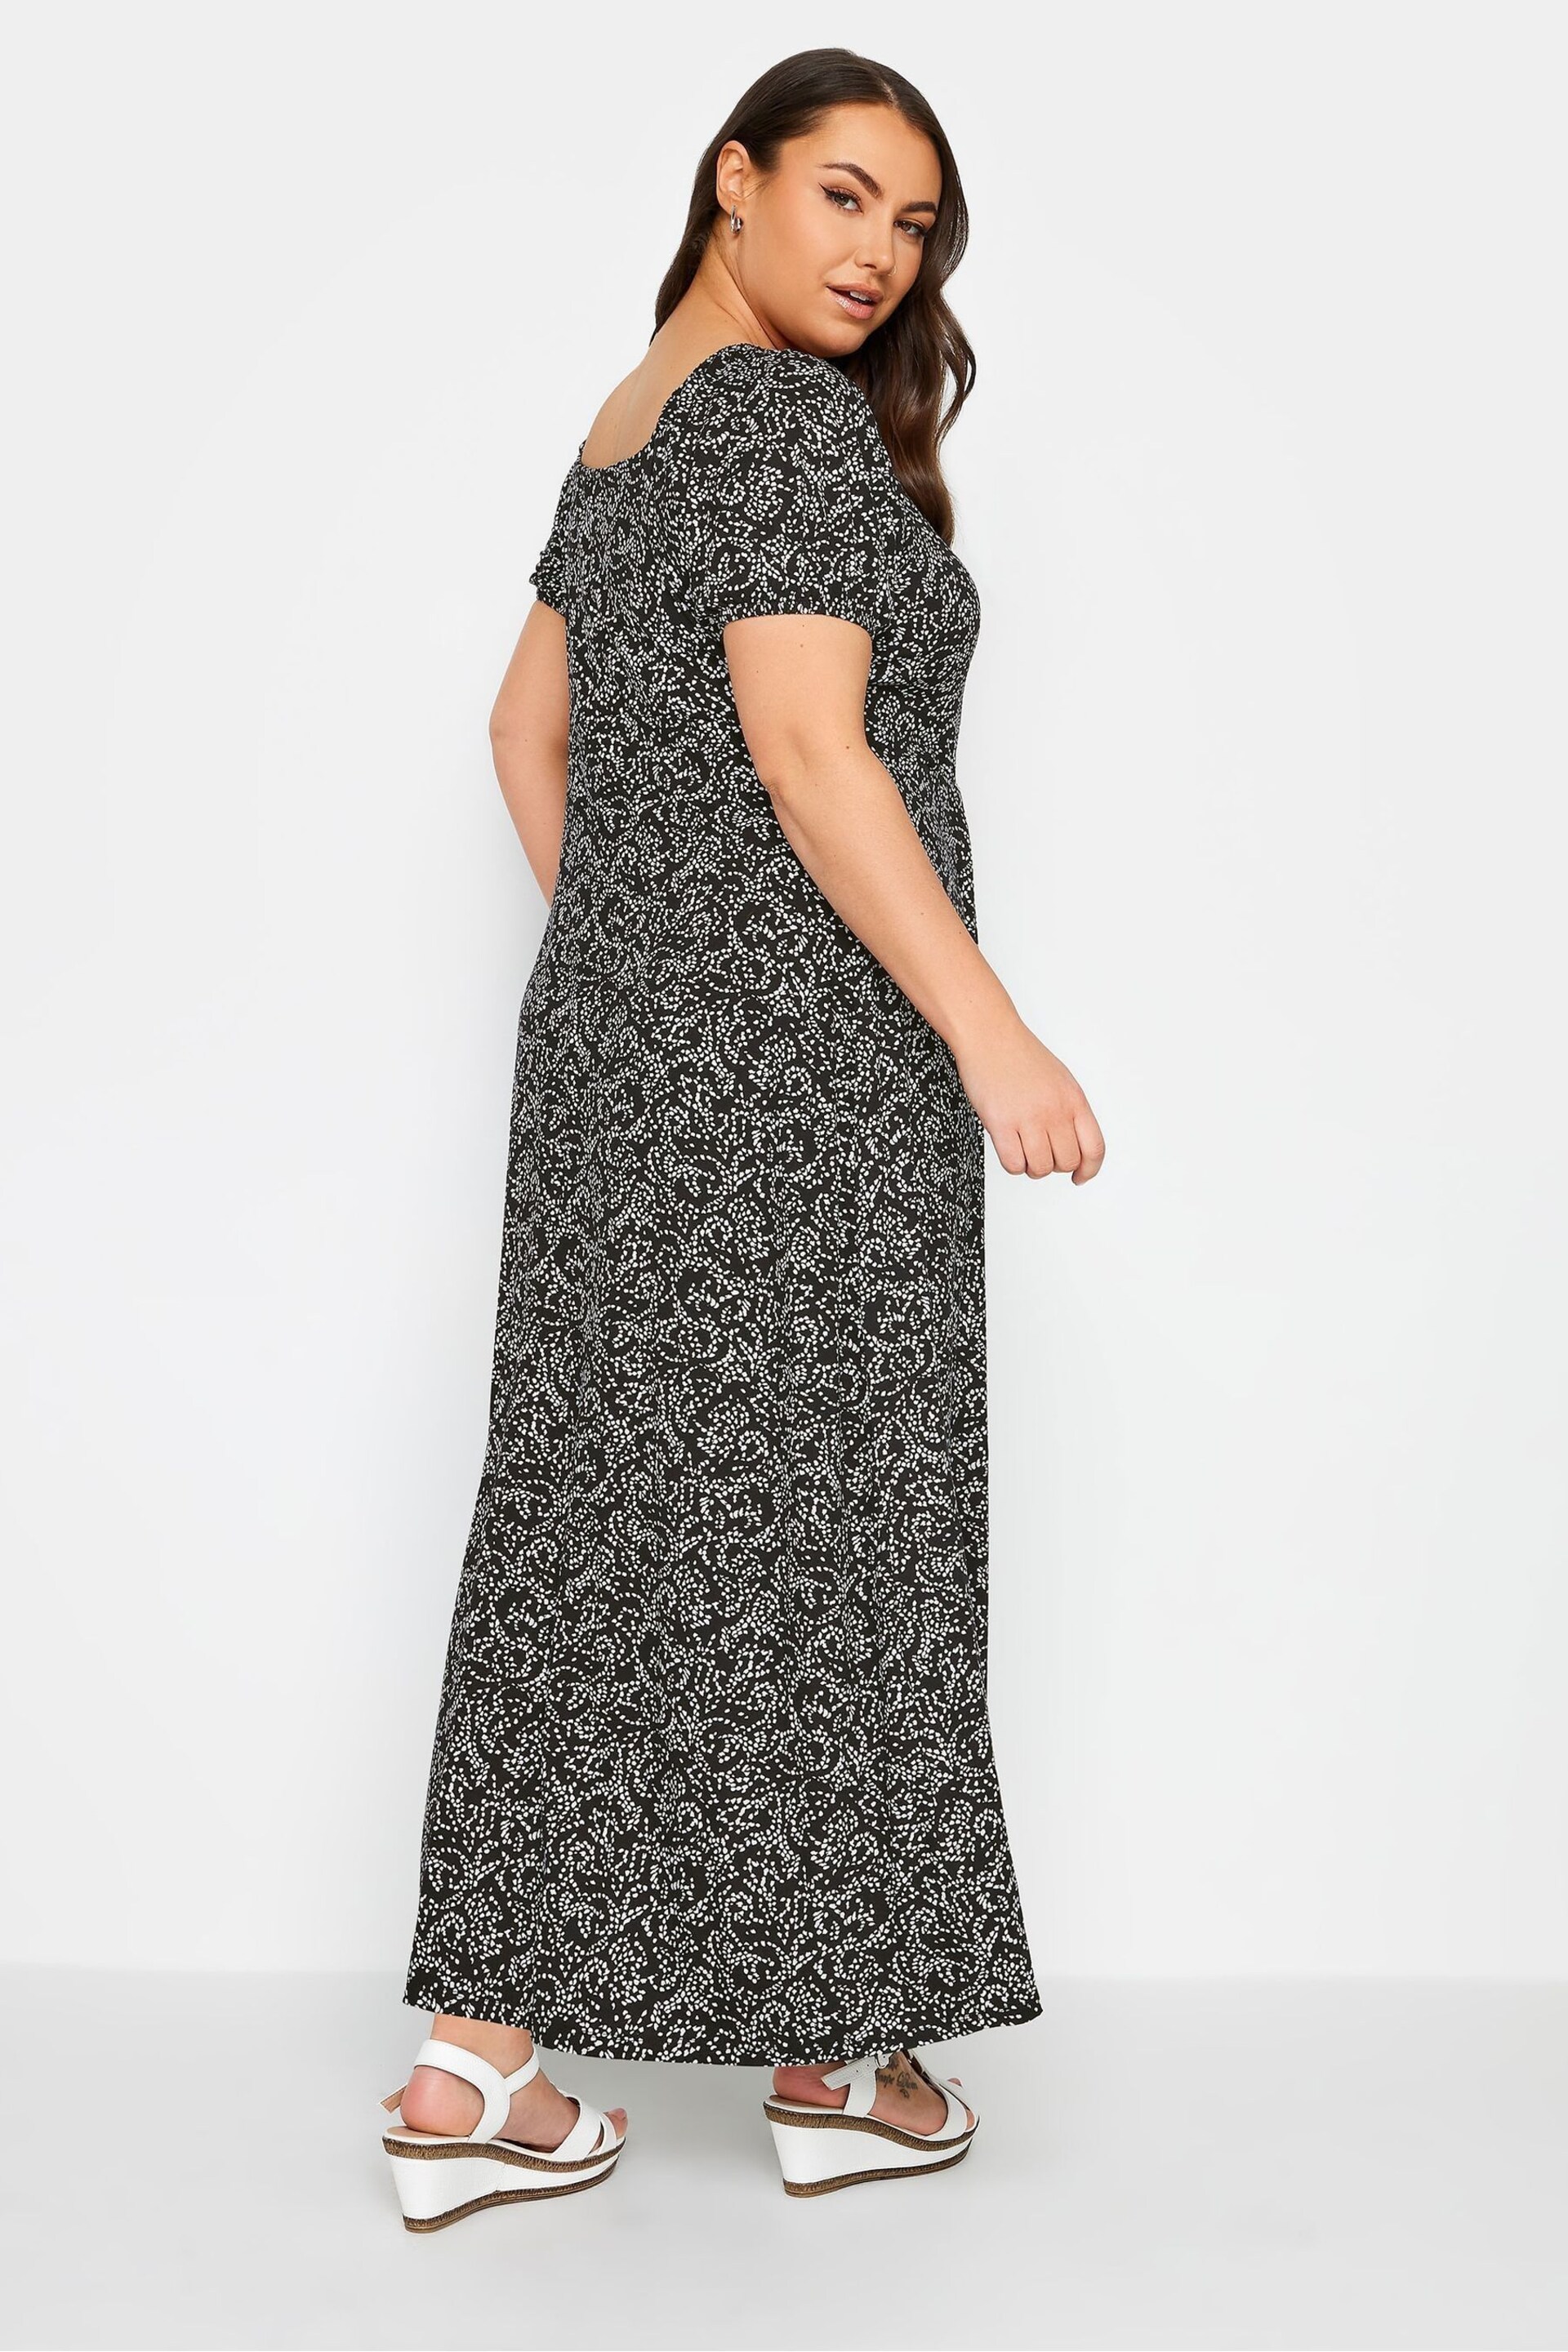 Yours Curve Black Floral Maxi Wrap Dress - Image 2 of 4